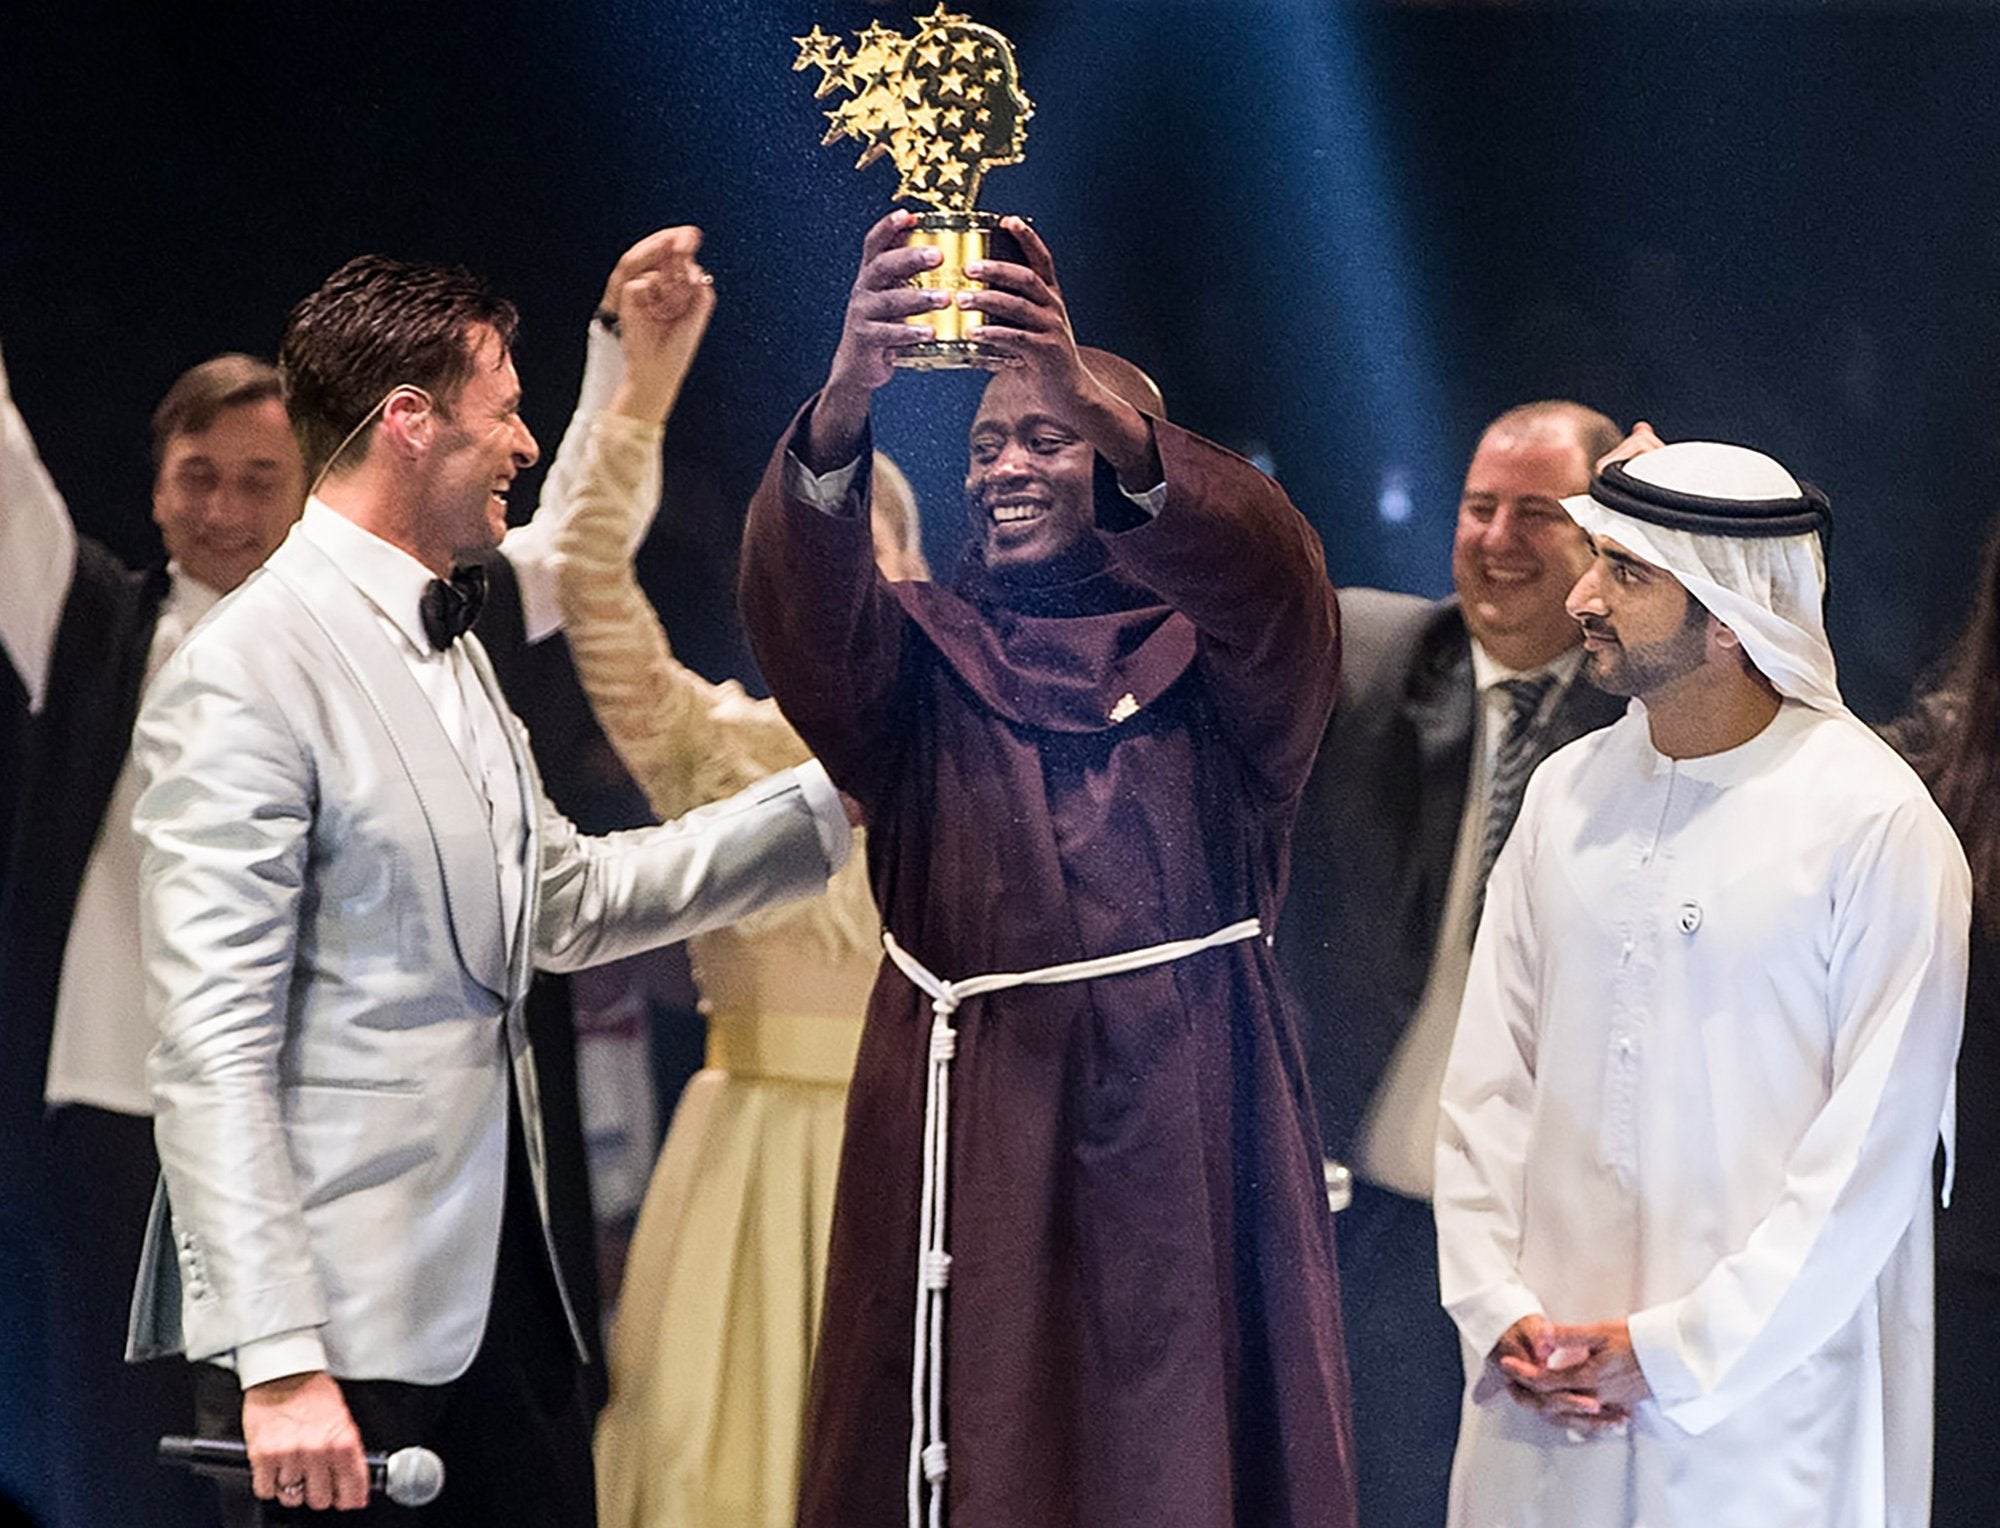 Peter Tabichi is given the Global Teacher Prize trophy by actor Hugh Jackman, left, and Dubai Crown Prince Hamdan bin Mohammed Al-Maktoum, right